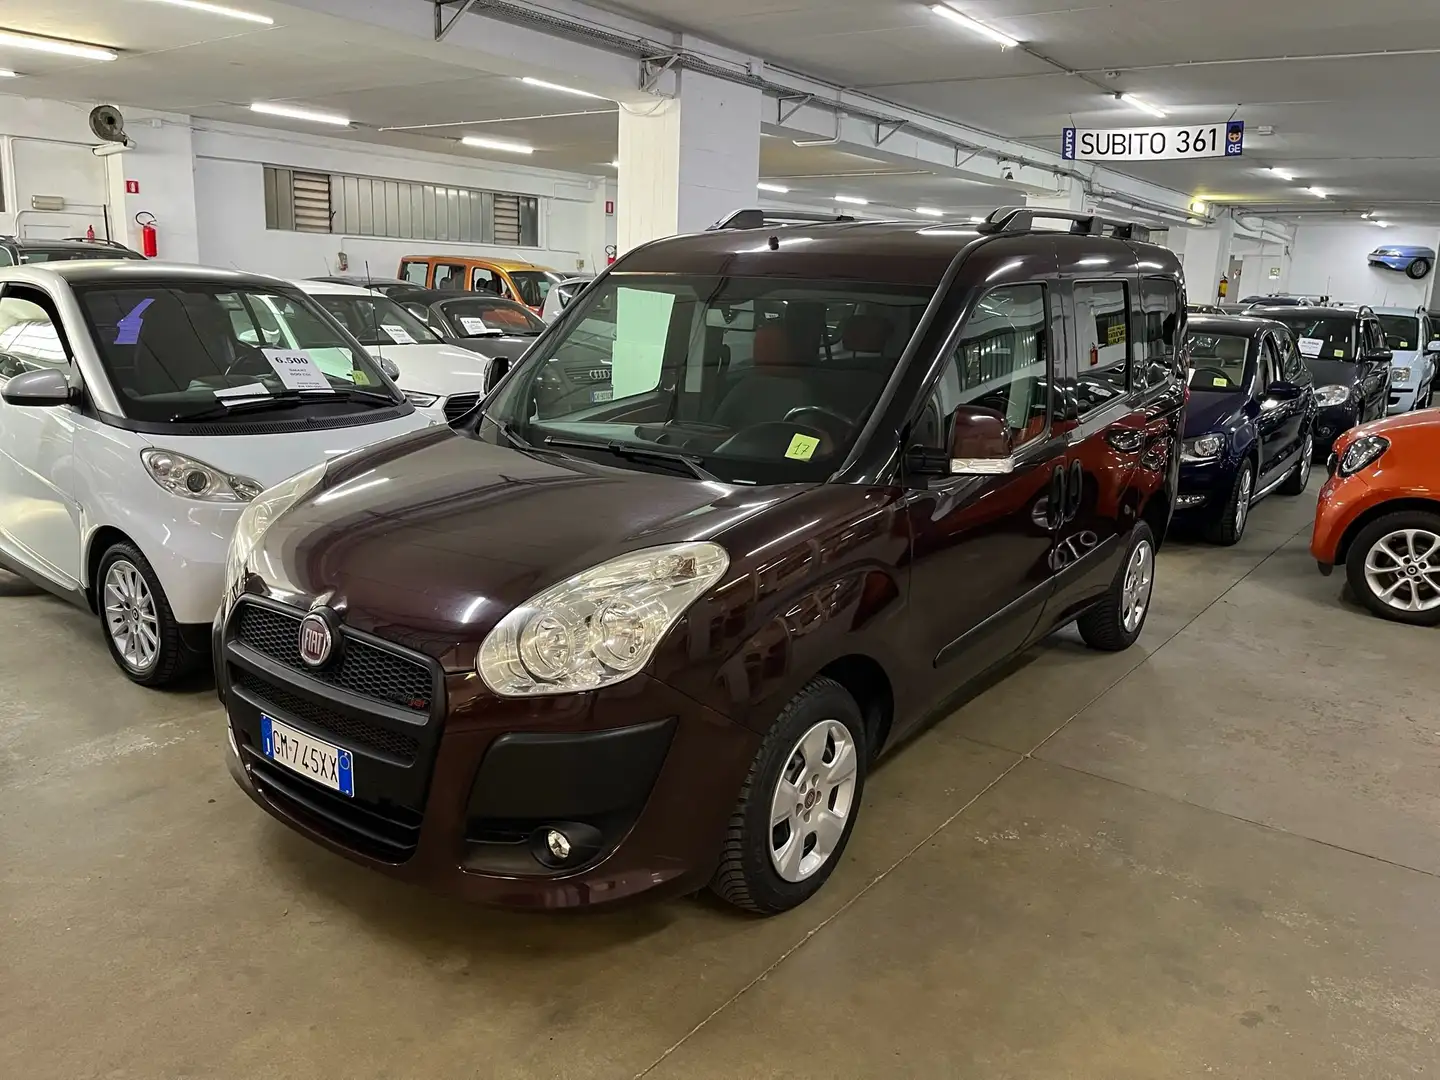 usato Fiat Doblo Station wagon a Genova - GE per € 9.300,-